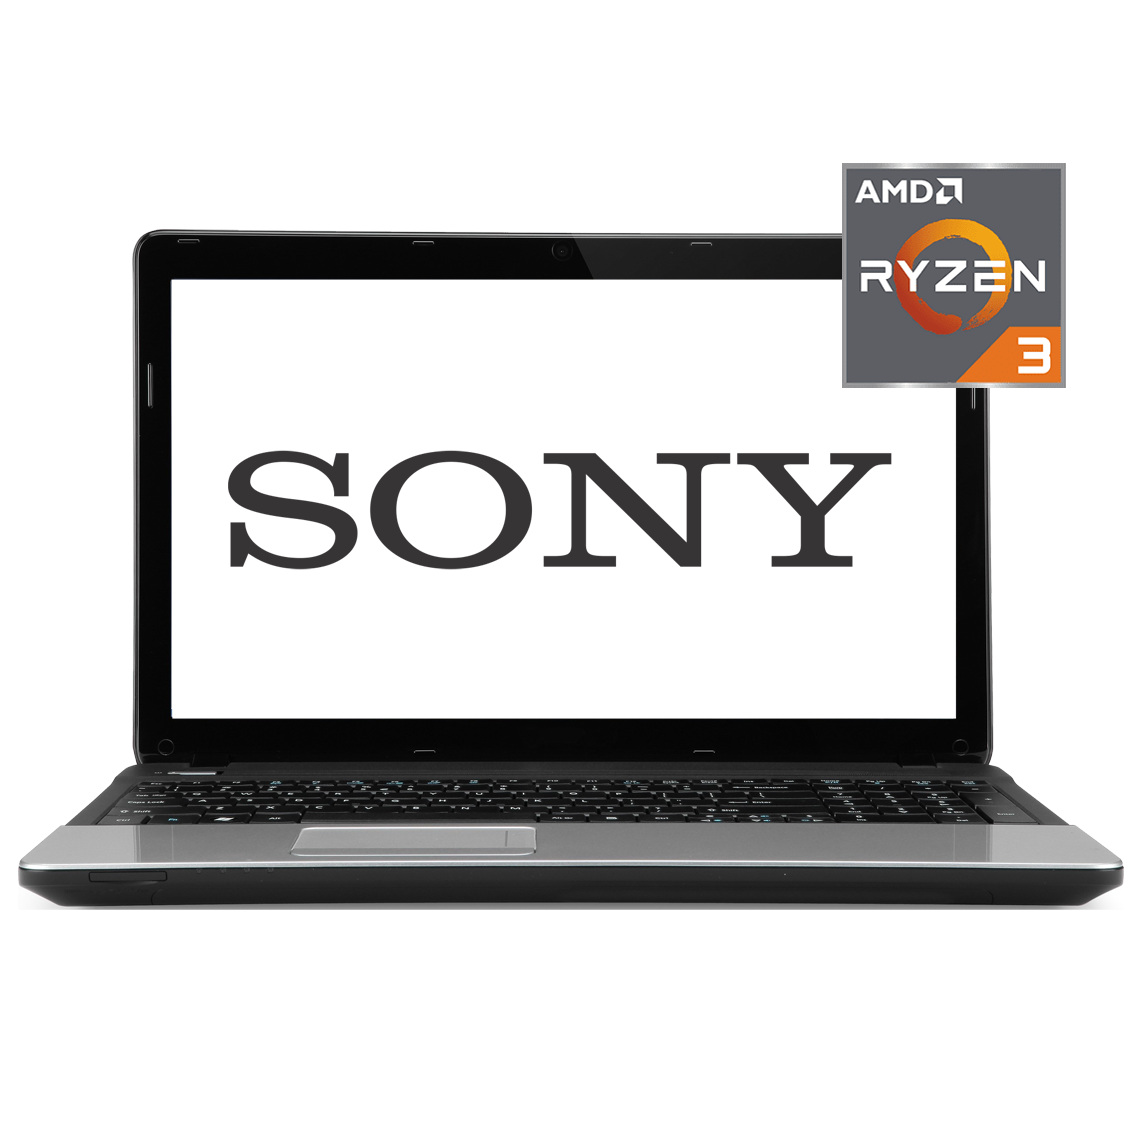 Sony - 17.3 inch AMD Ryzen 3